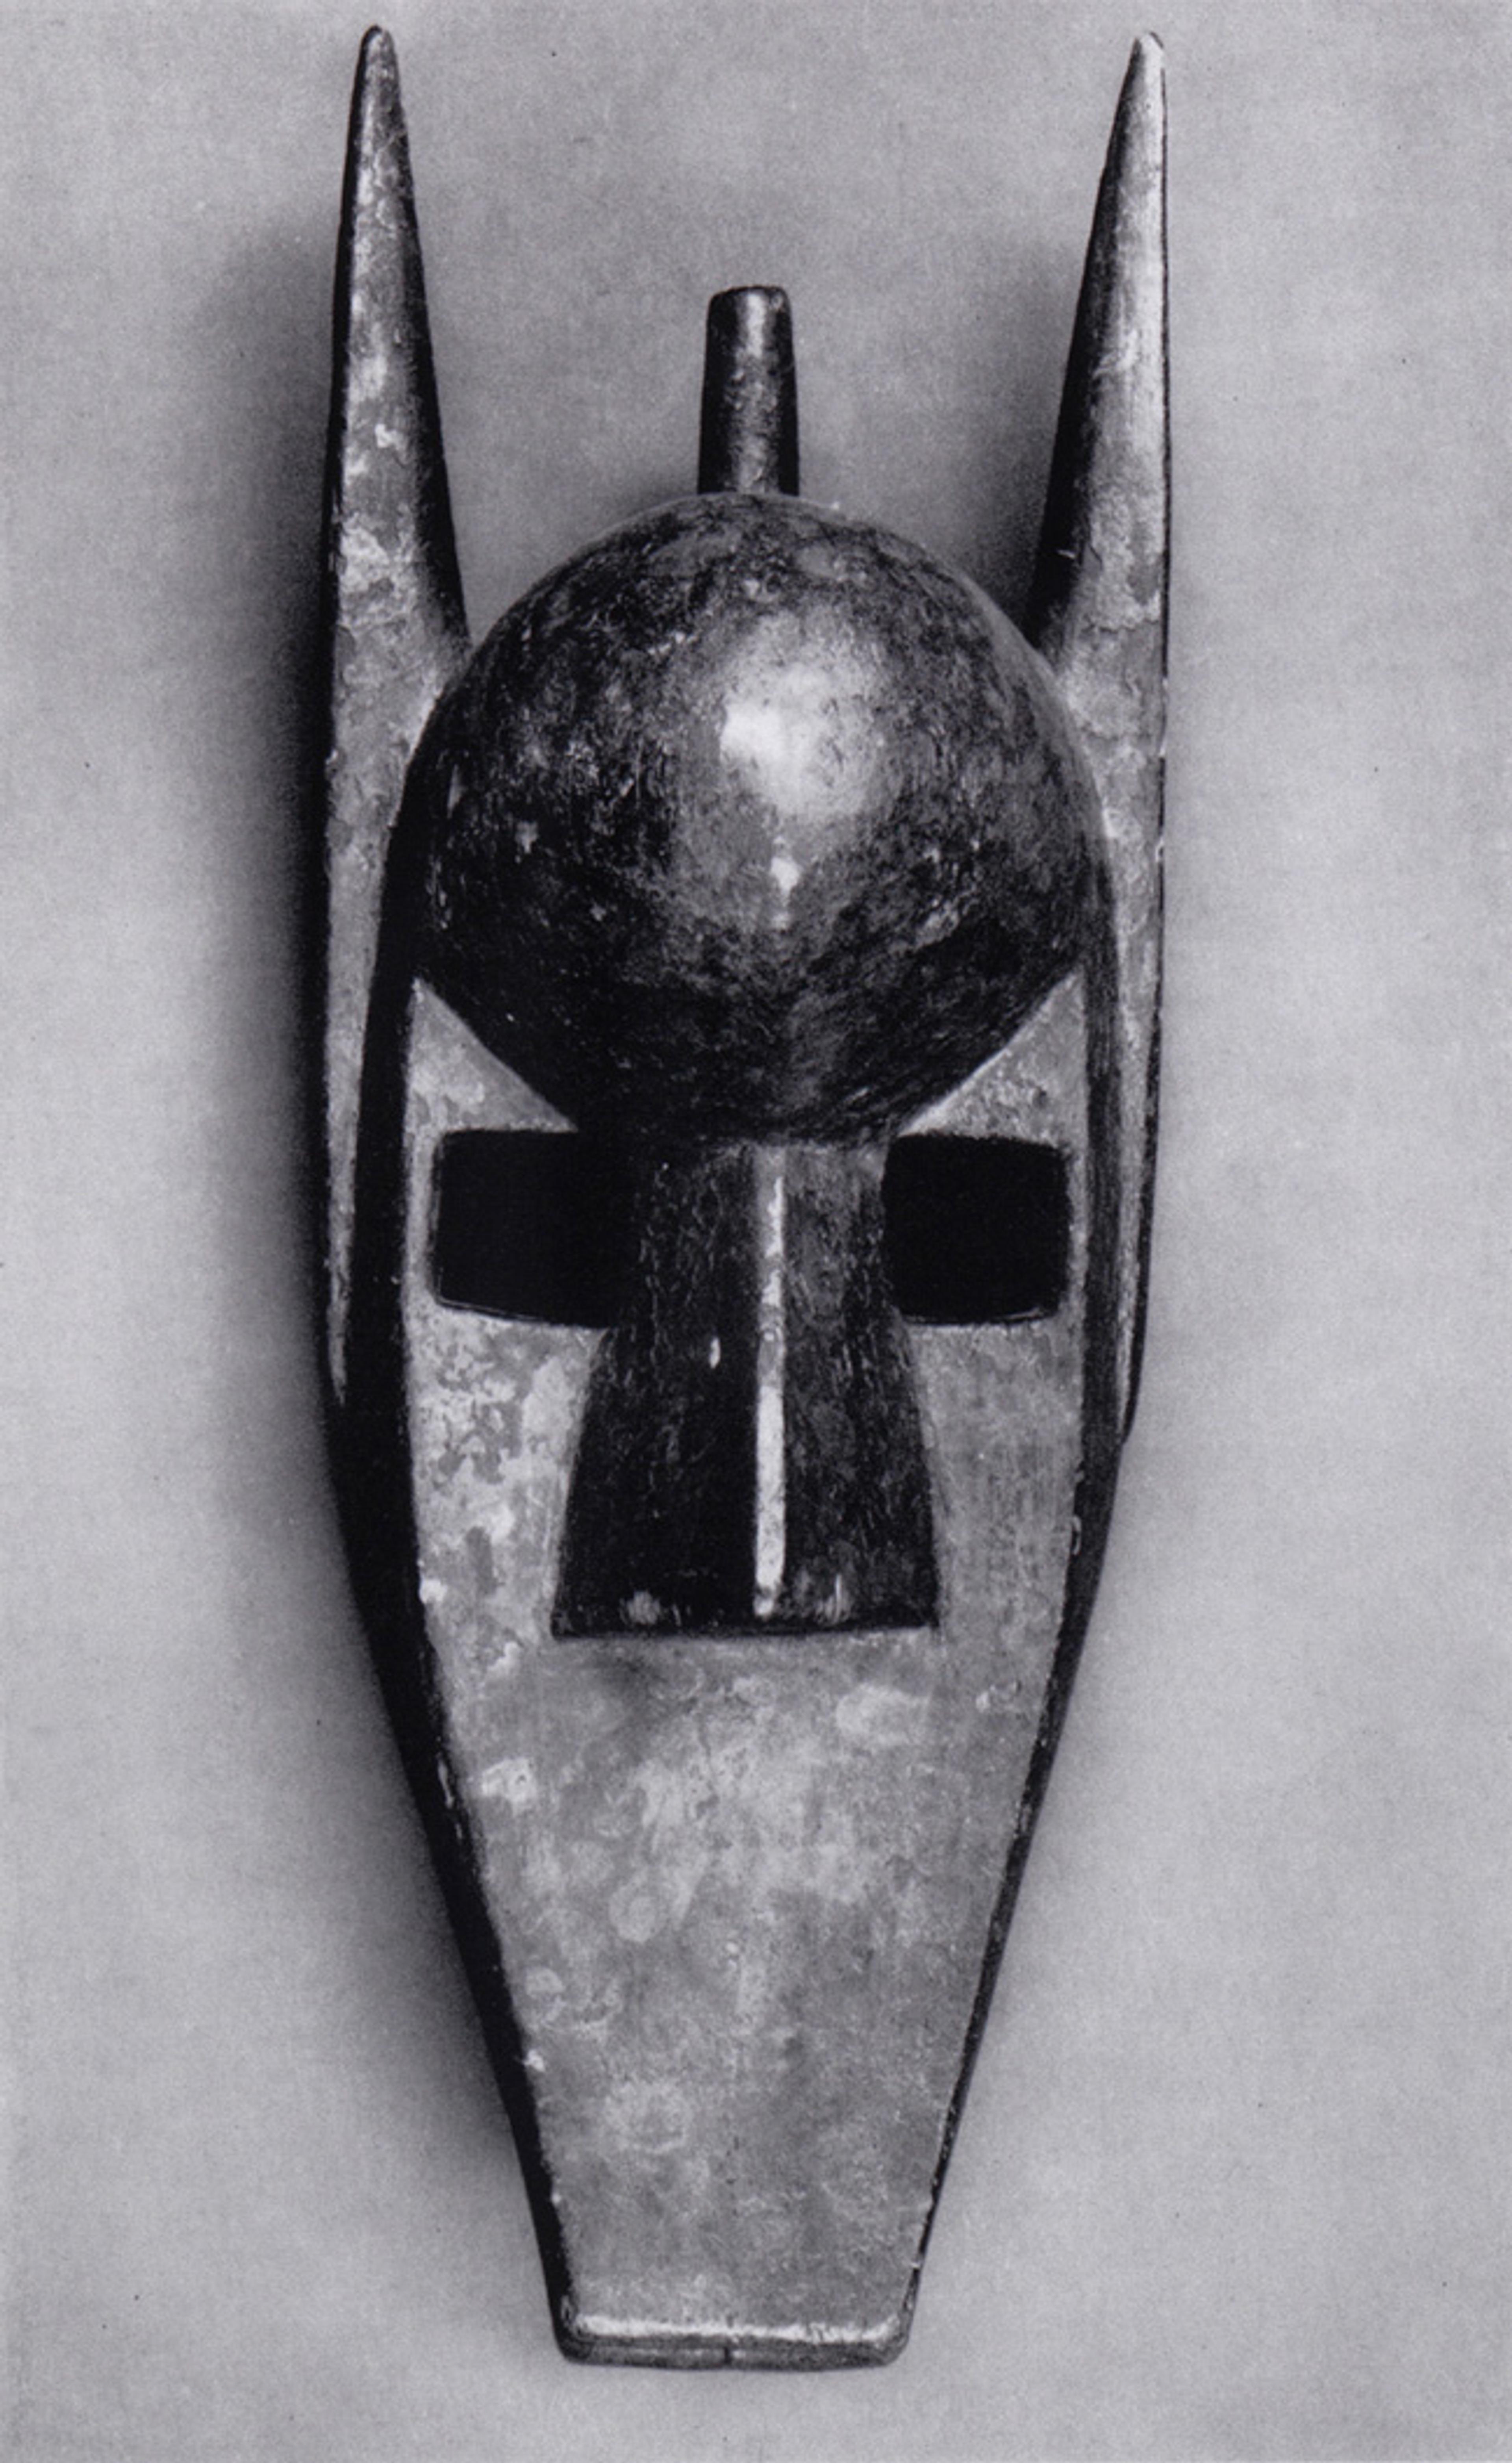 Sherrie Levine, African Masks After Walker Evans VI, 2014, 1 of 24 giclée inkjet prints, edition 9 of 12. Courtesy of the Artist, Simon Lee Gallery and the Walker Evans Archive, Metropolitan Museum of Art, New York